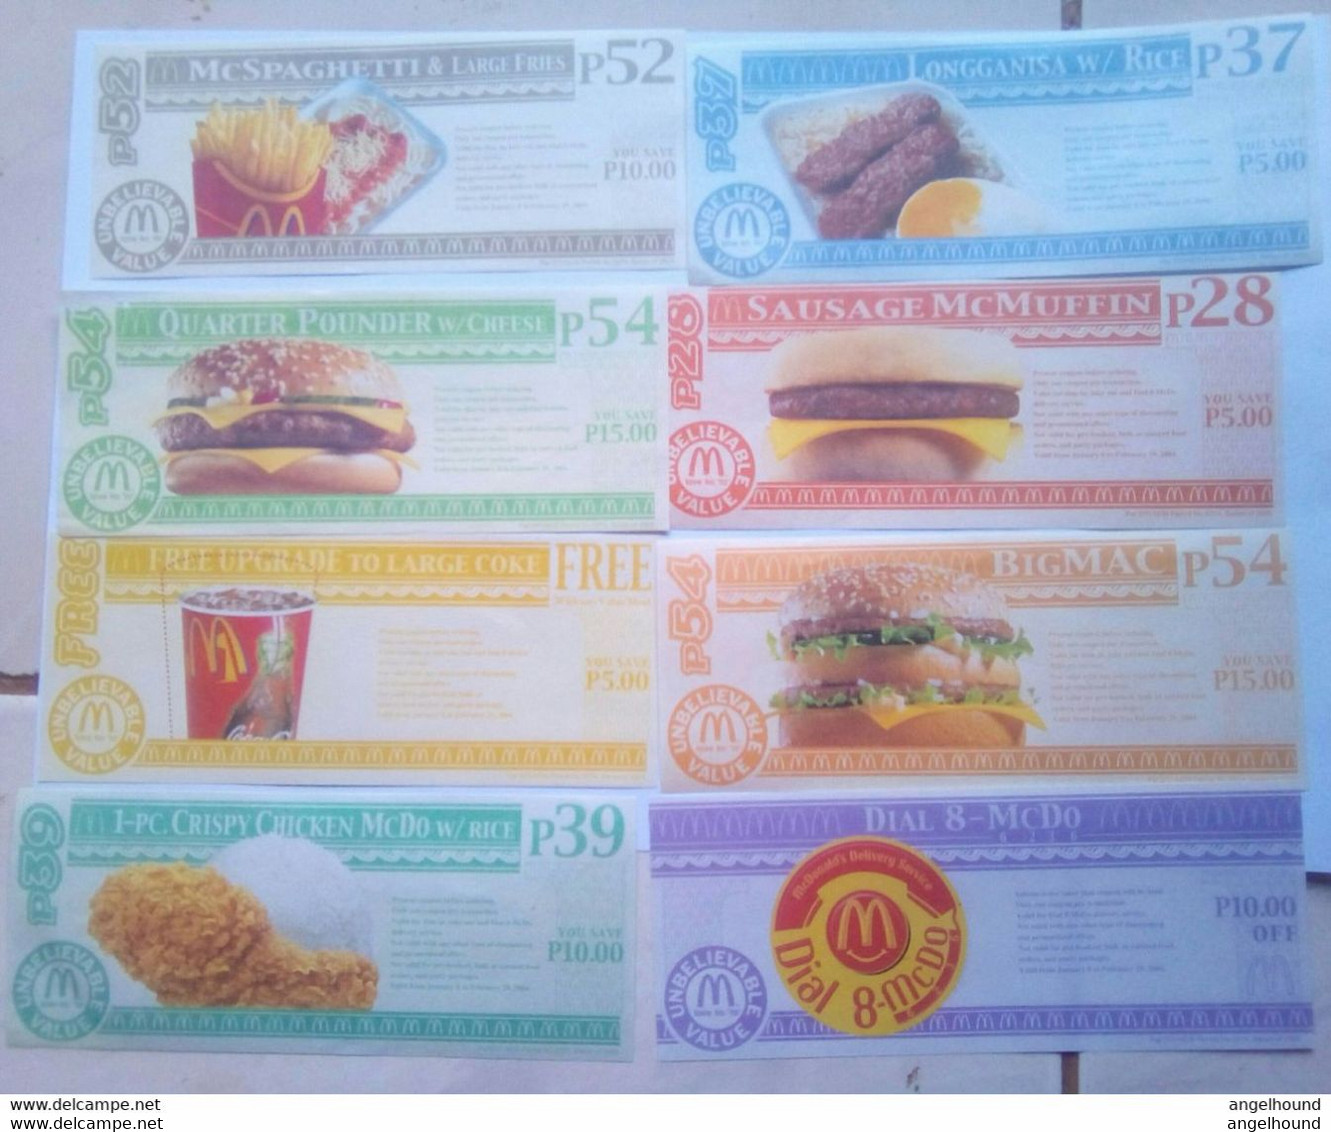 McDonald Philippines 2004 New Year Promo W/ Coupons - McDonald's